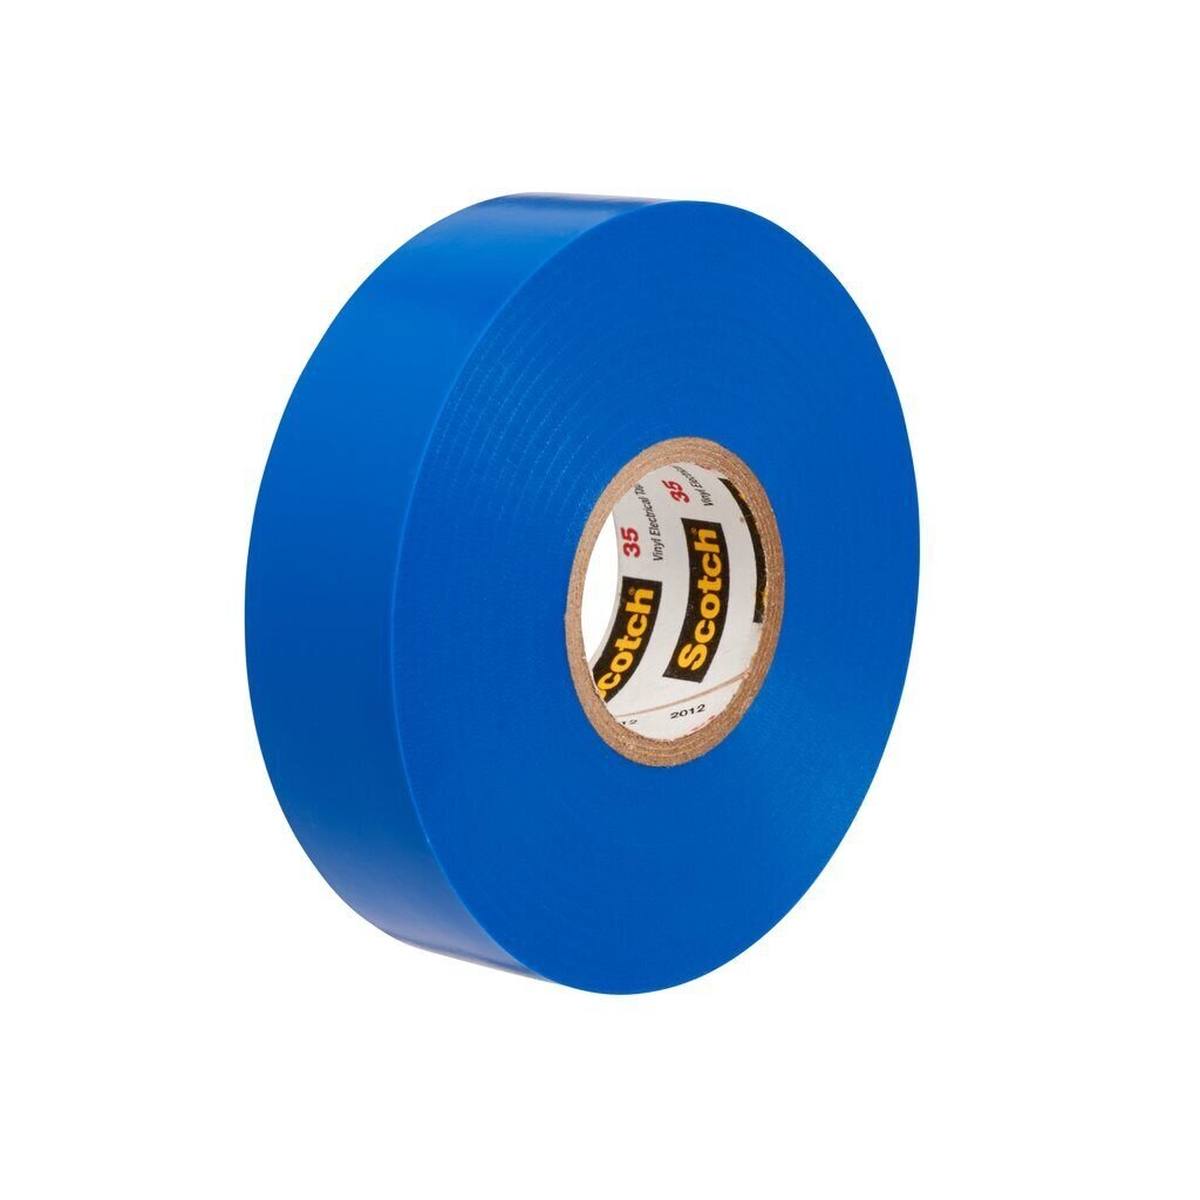 3M Scotch 35 vinyl isolatietape, blauw, 19 mm x 20 m, 0,18 mm